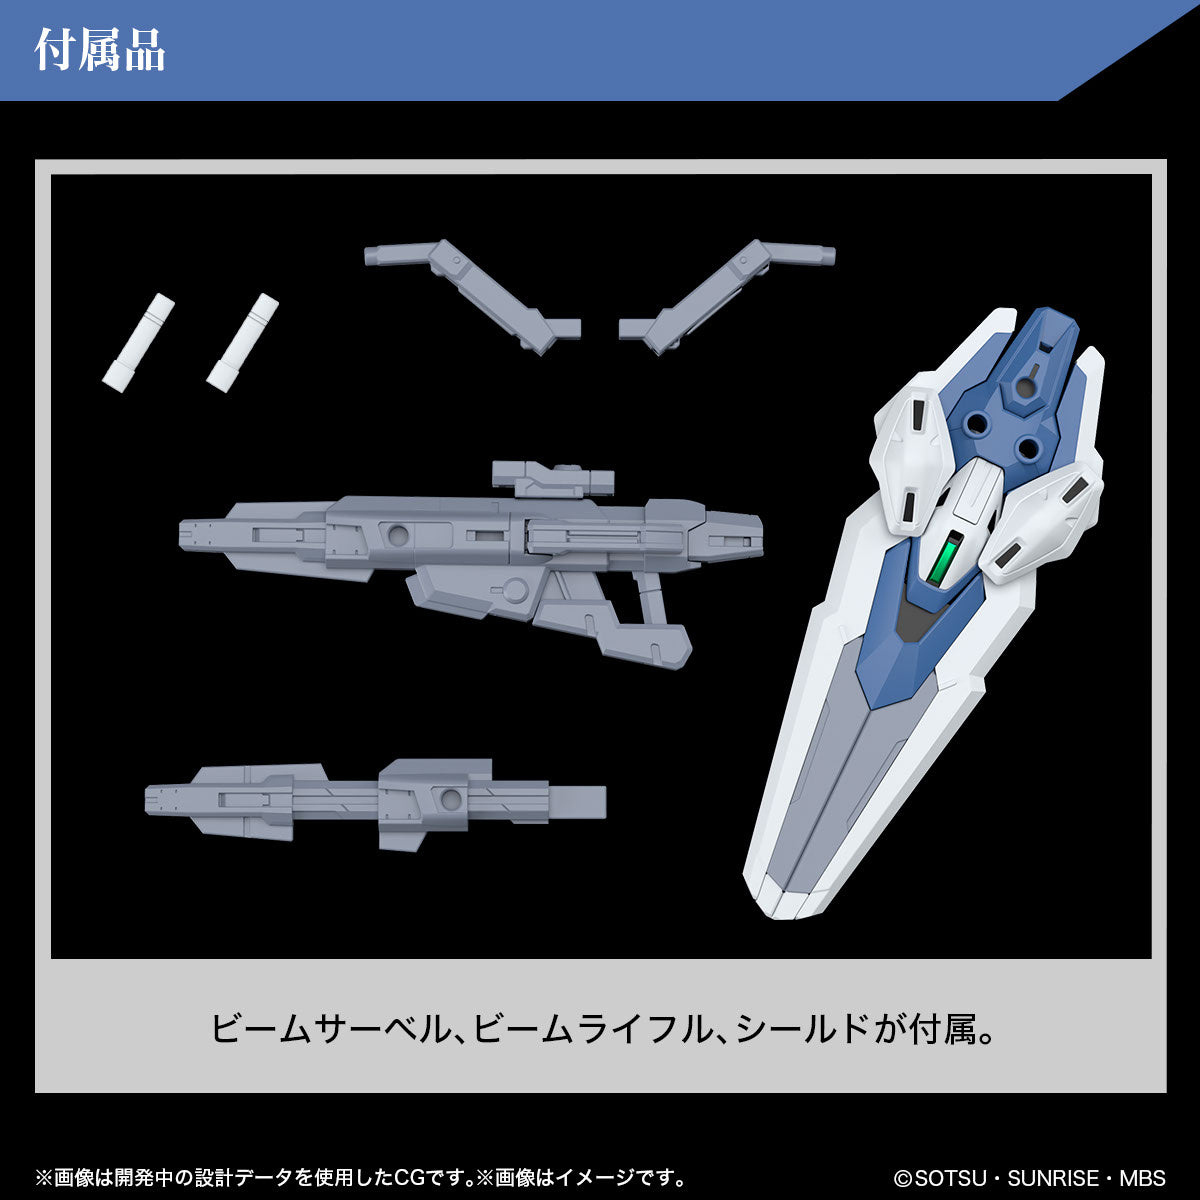 GUNDAM - HG 1/144 - Gundam Aerial Rebuild